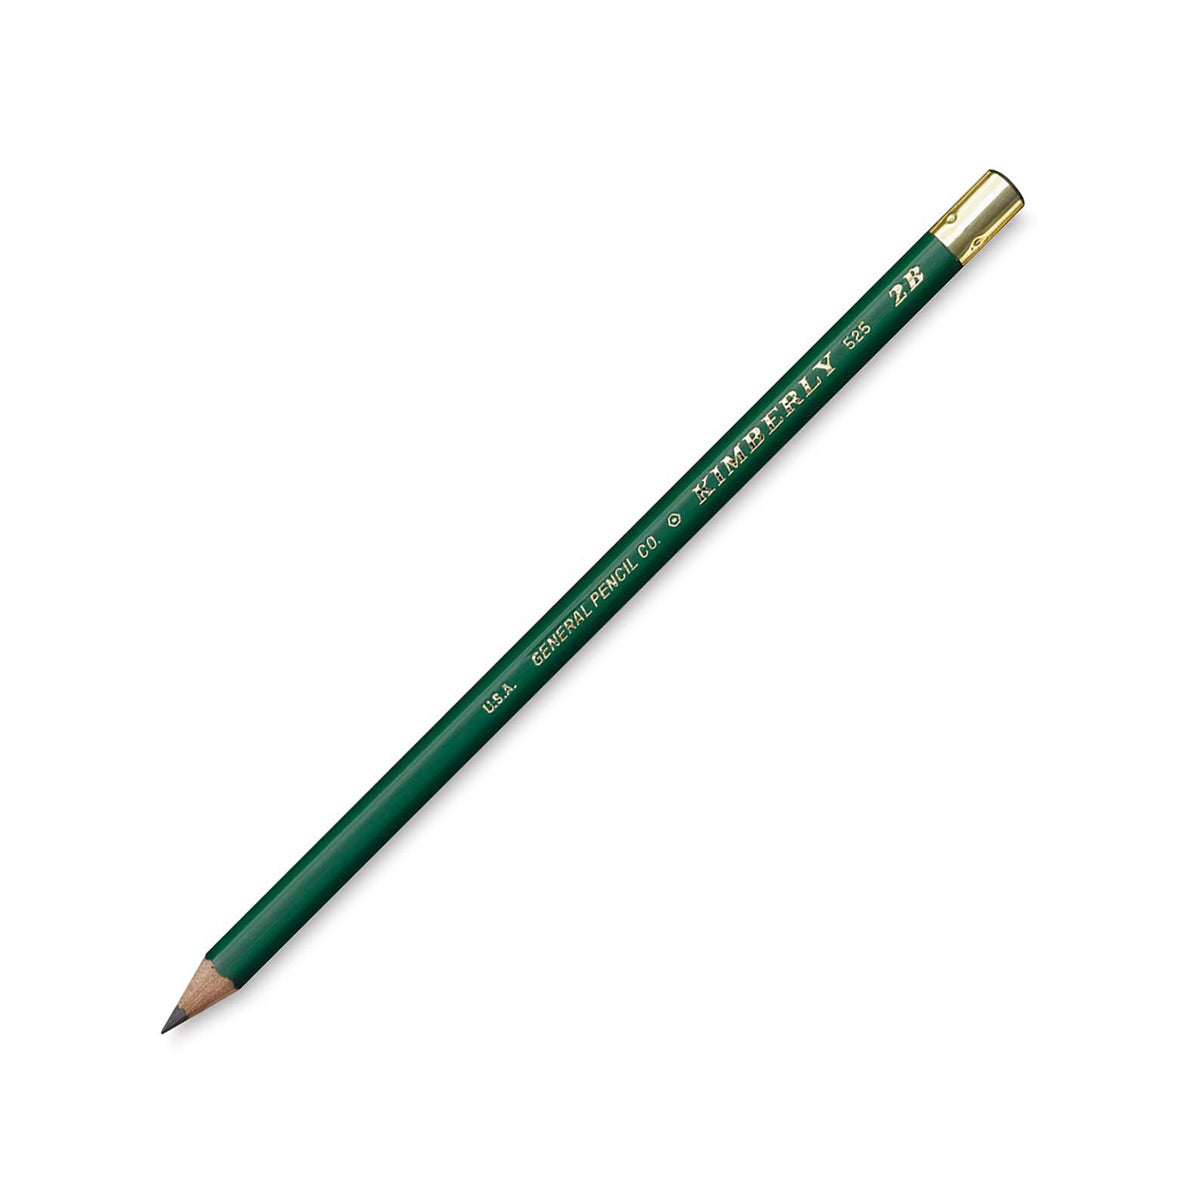 General Pencil 406765 Sax Solid Drawing Pencil, 4H Tip, Black